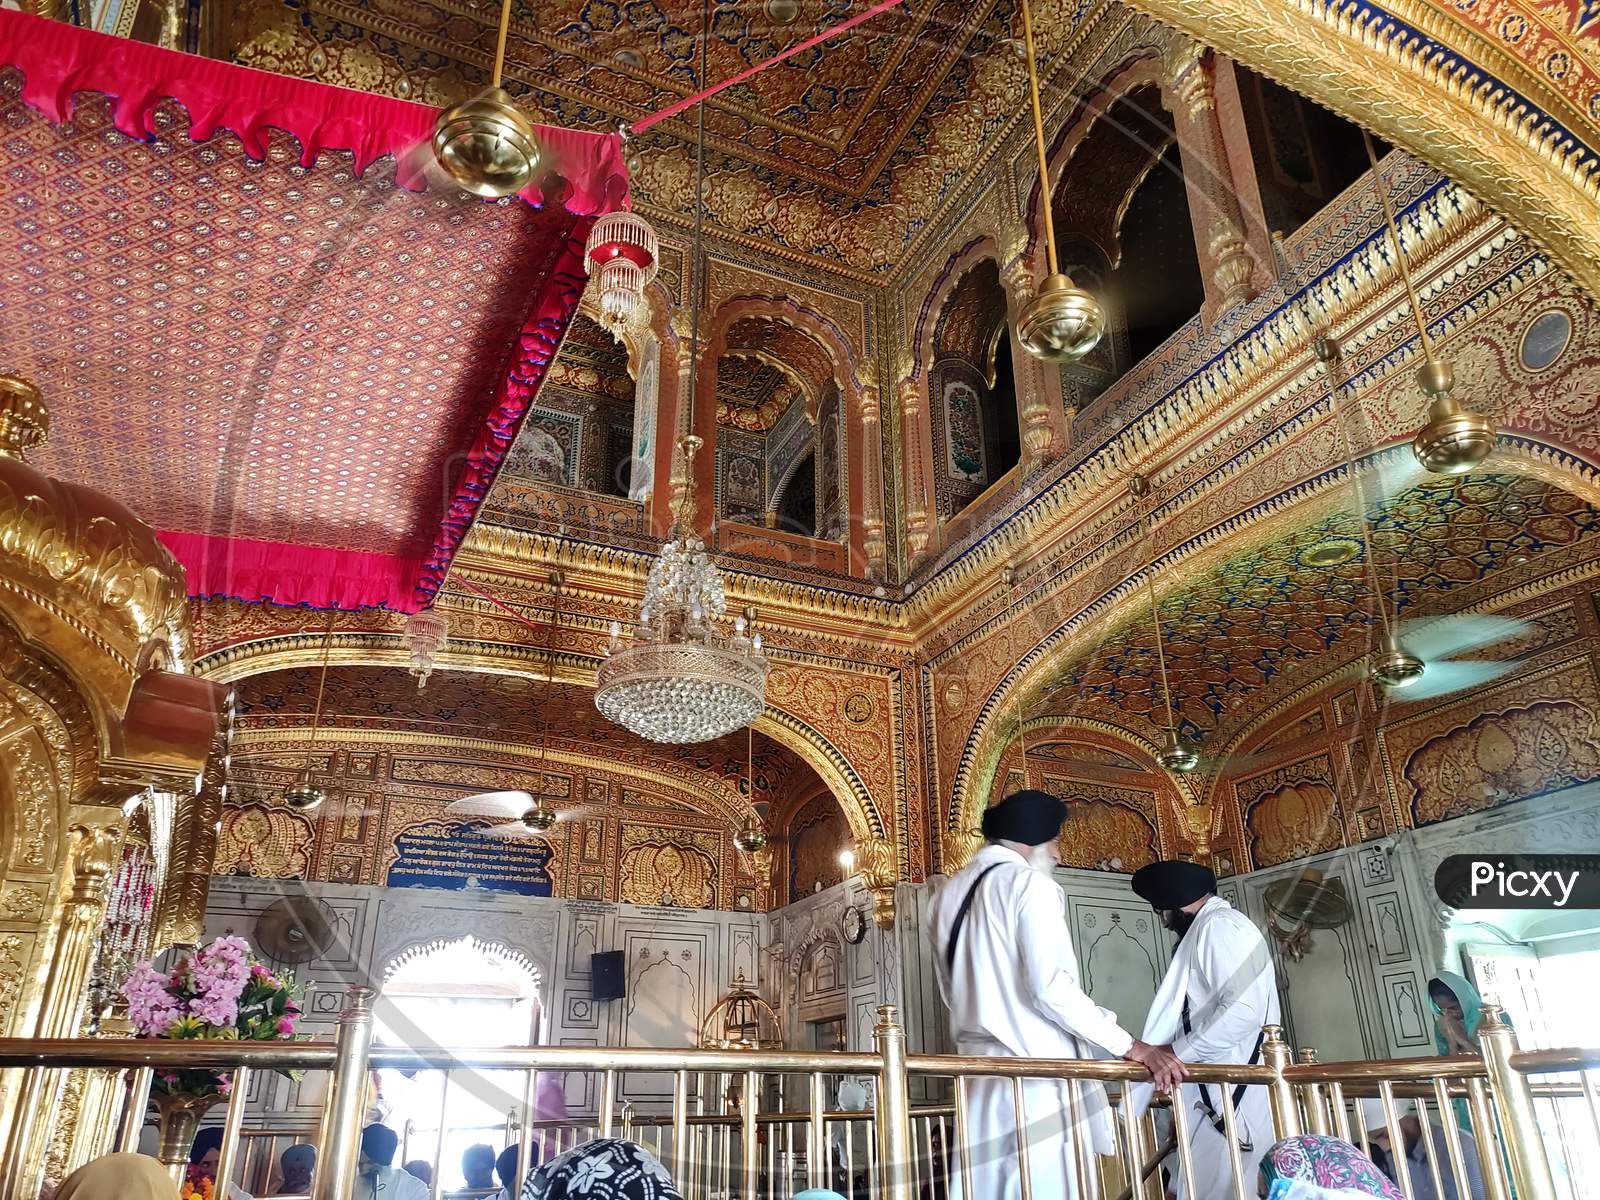 Marvelous architecture of the Gurudwara Durbar Sahib at Punjab